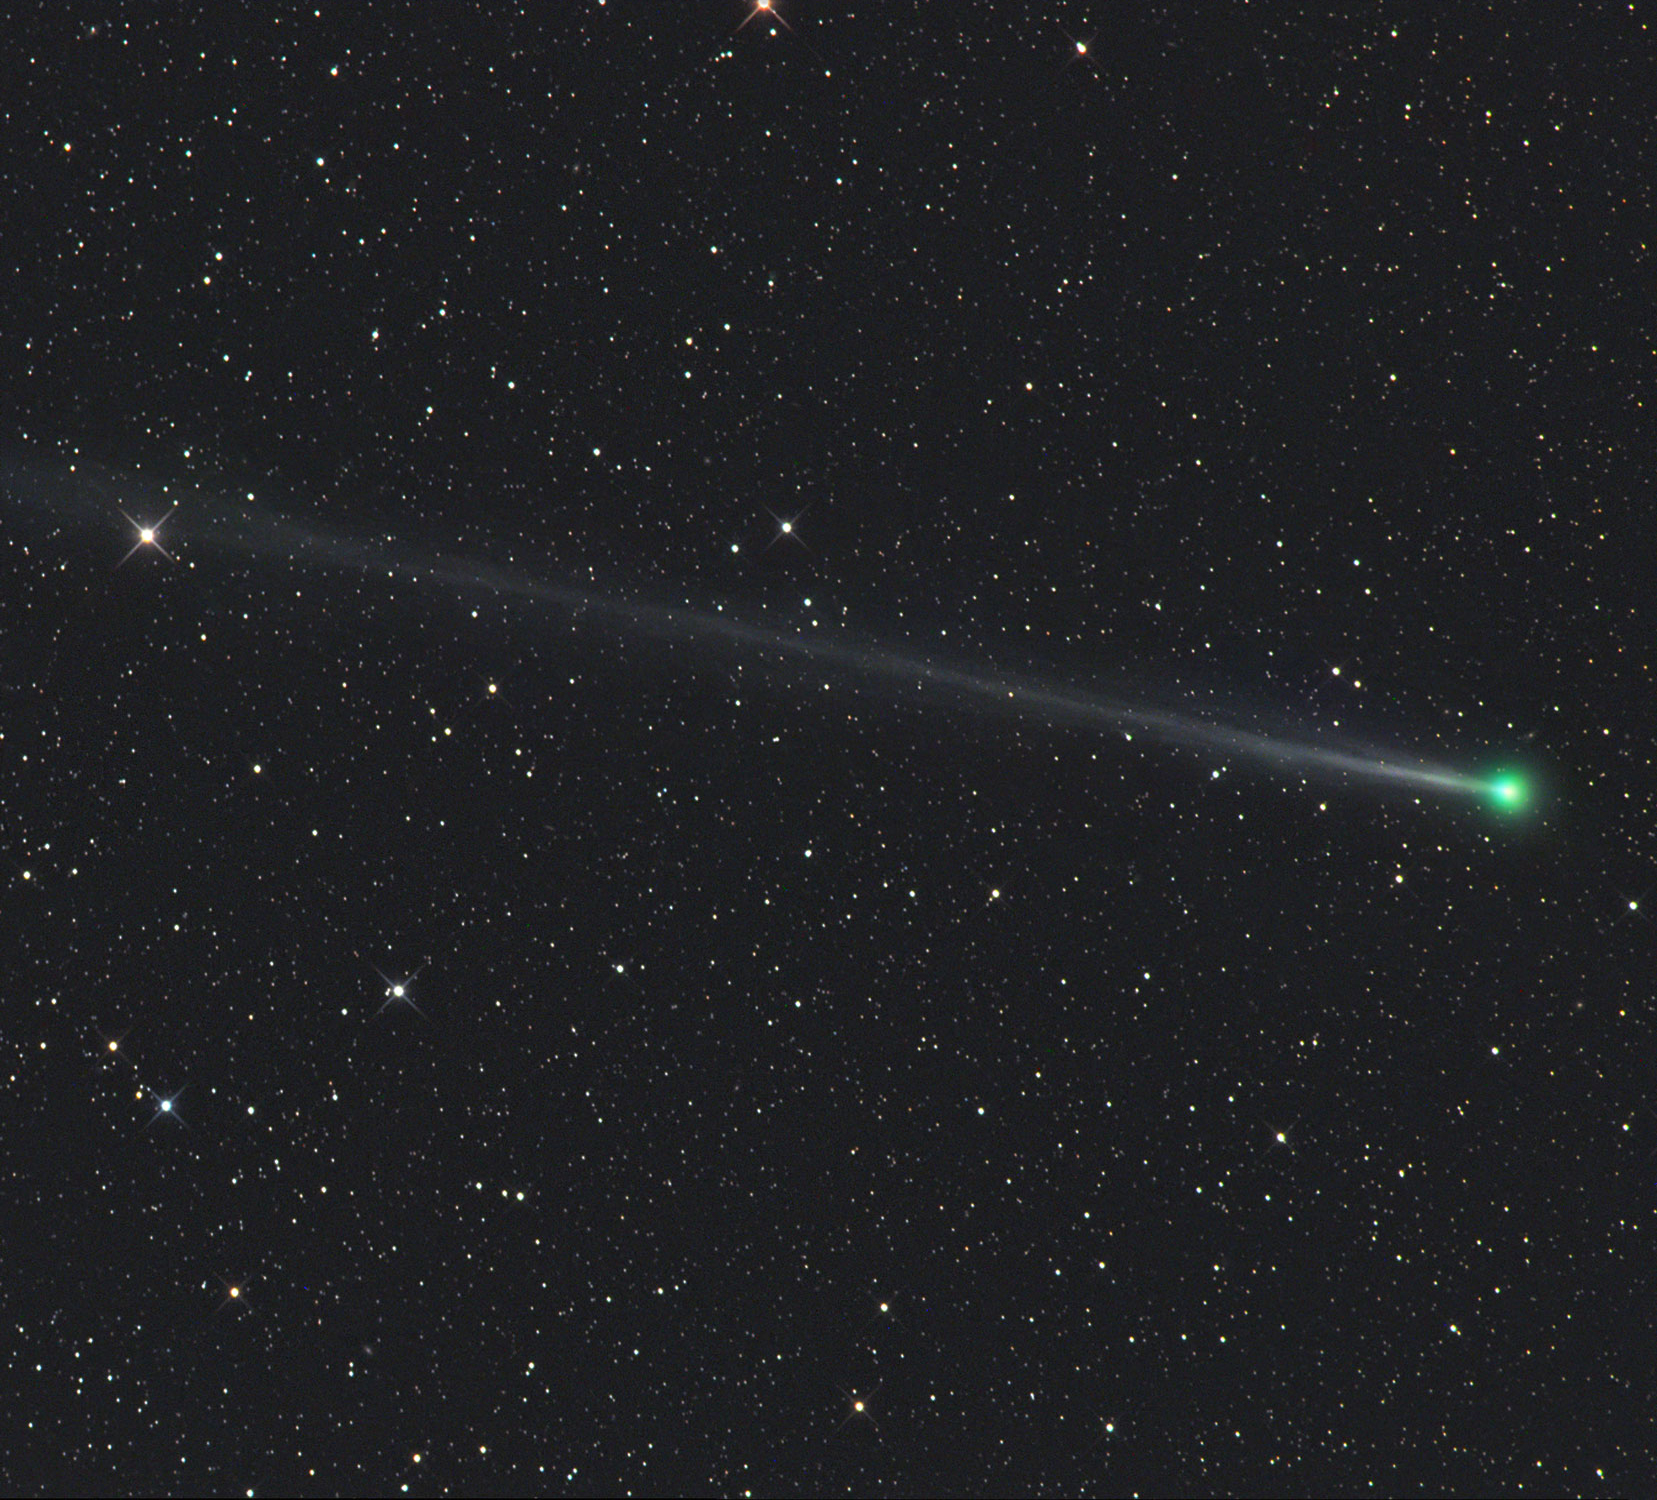 image of greenish comet